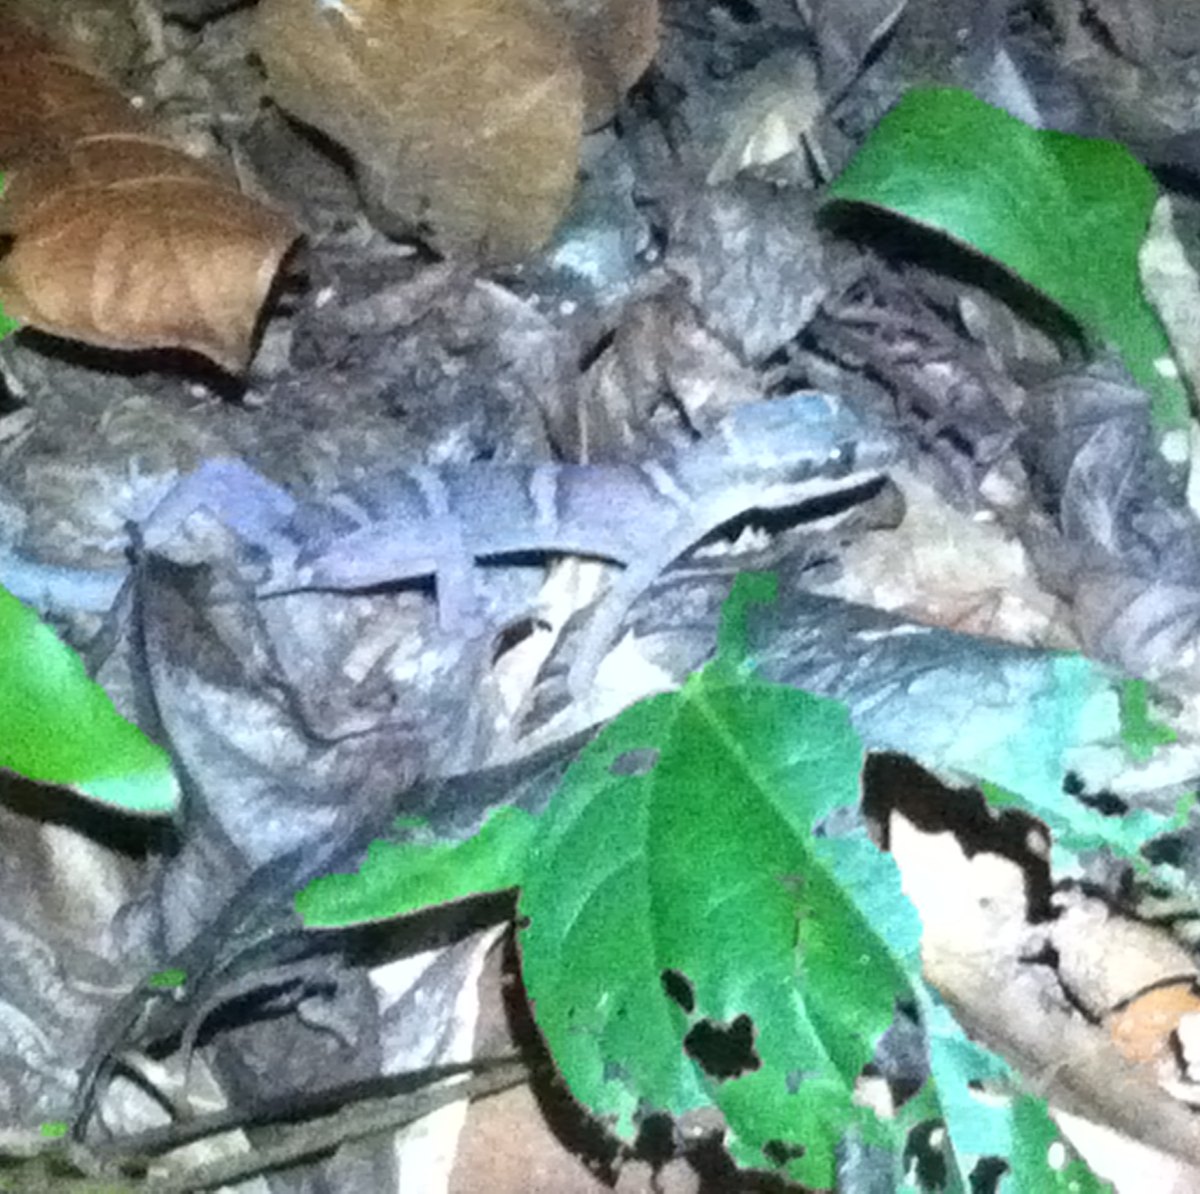 Tioman Bent-toed gecko